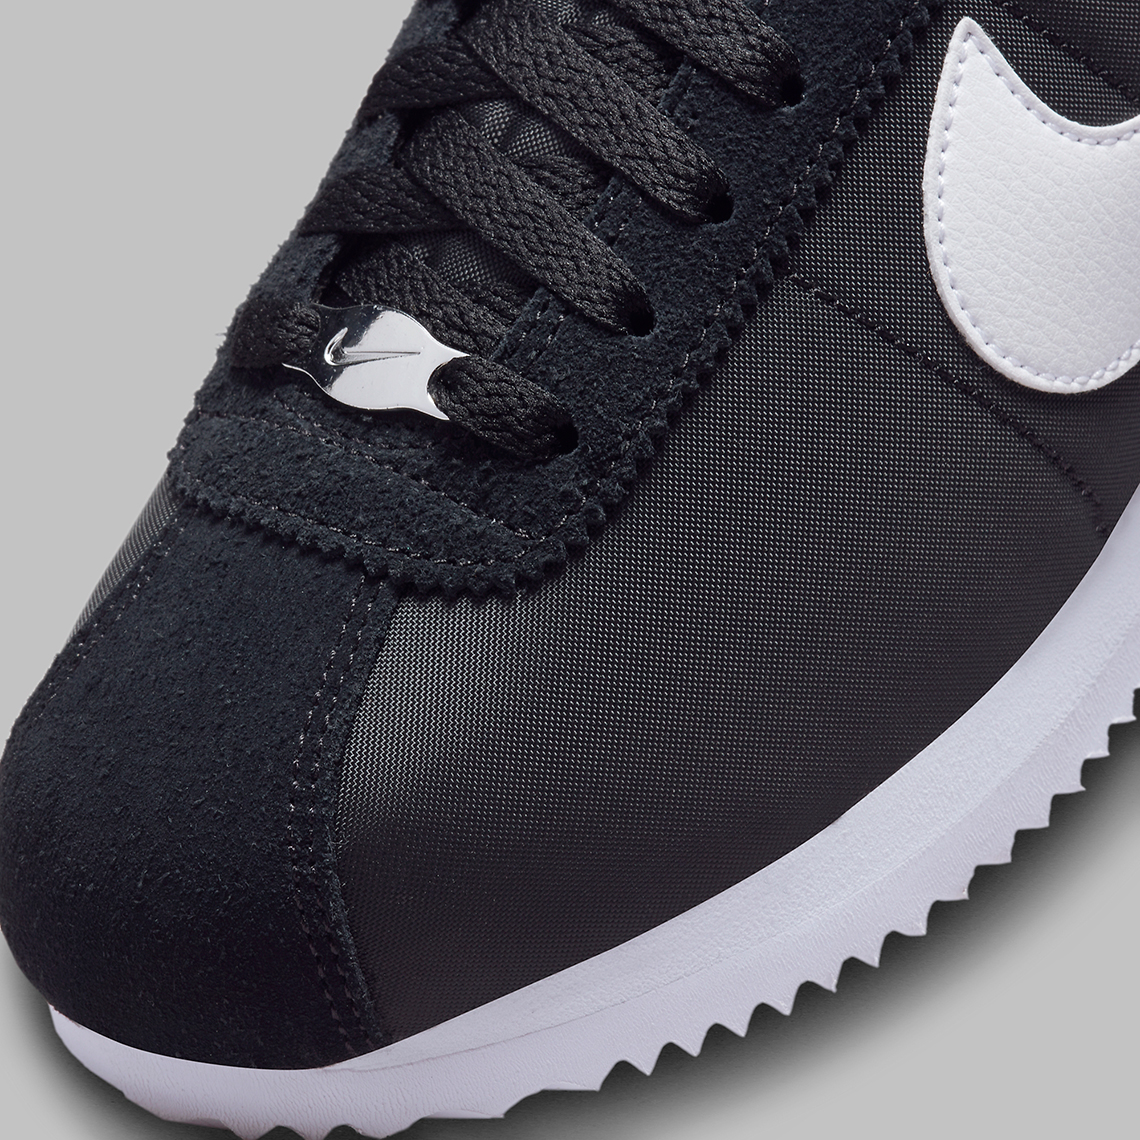 Nike Cortez Womens Black White Dz2795 001 Release Date 5